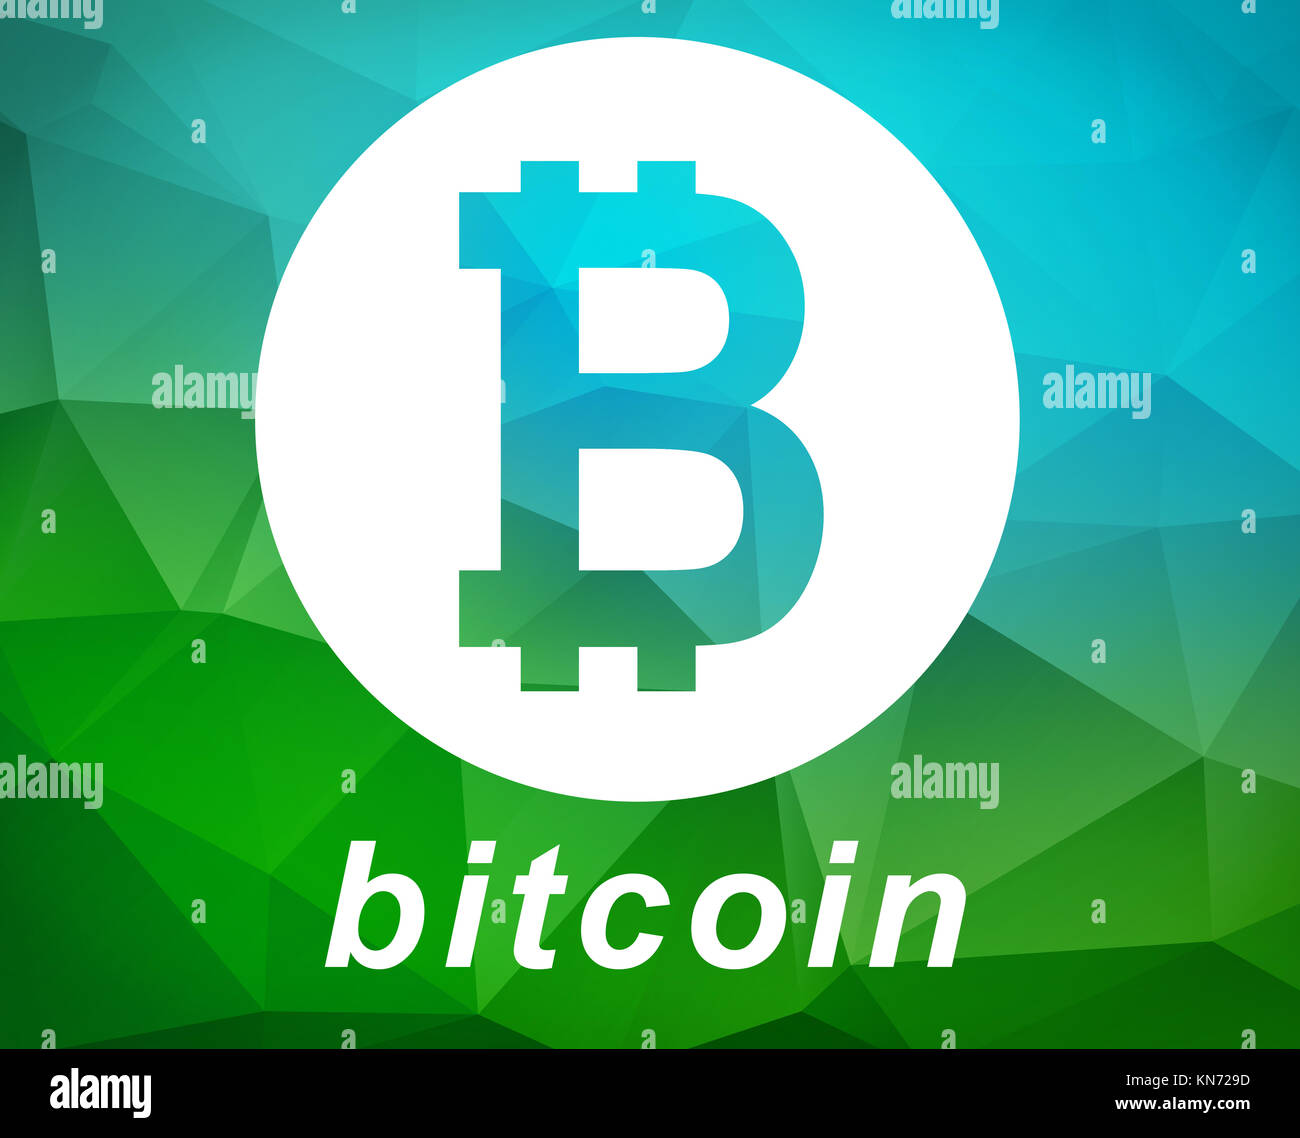 bitcoin symbol illustration Stock Photo